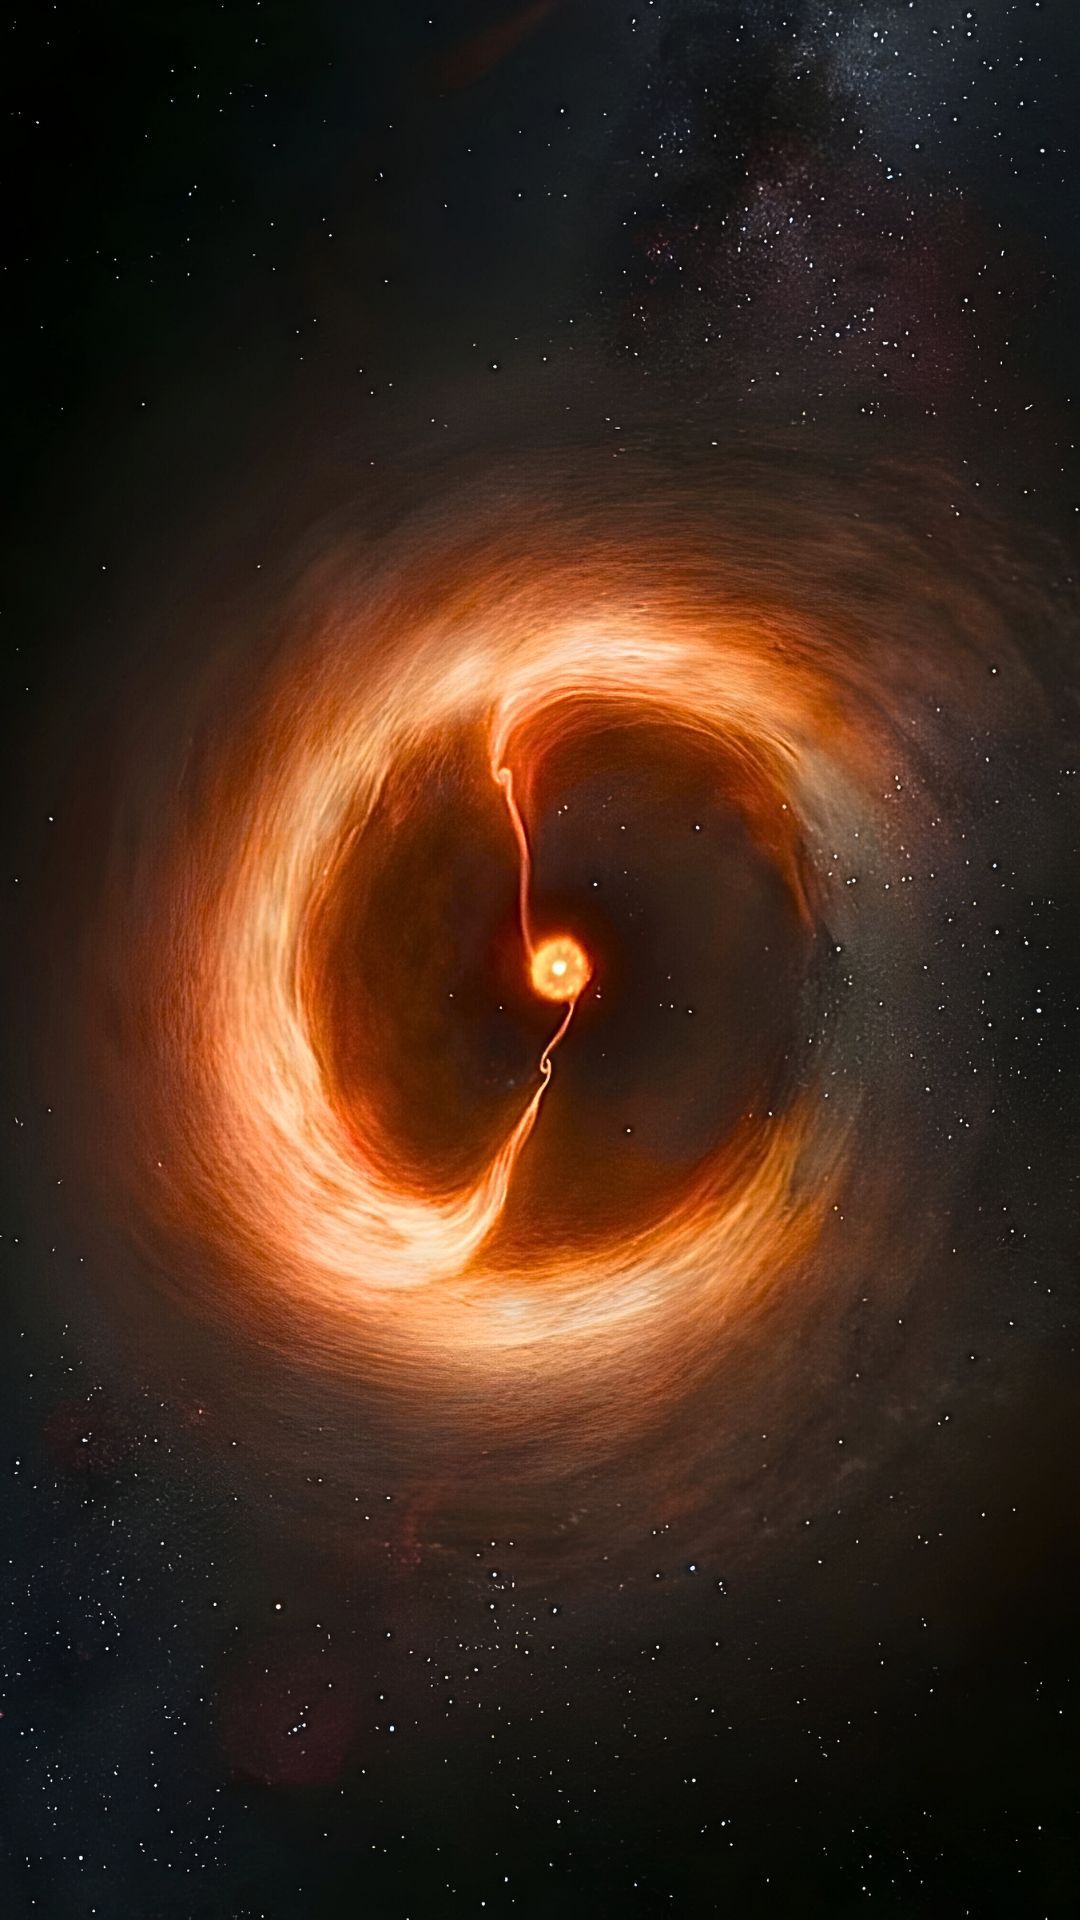 Black Hole Image Wallpaper